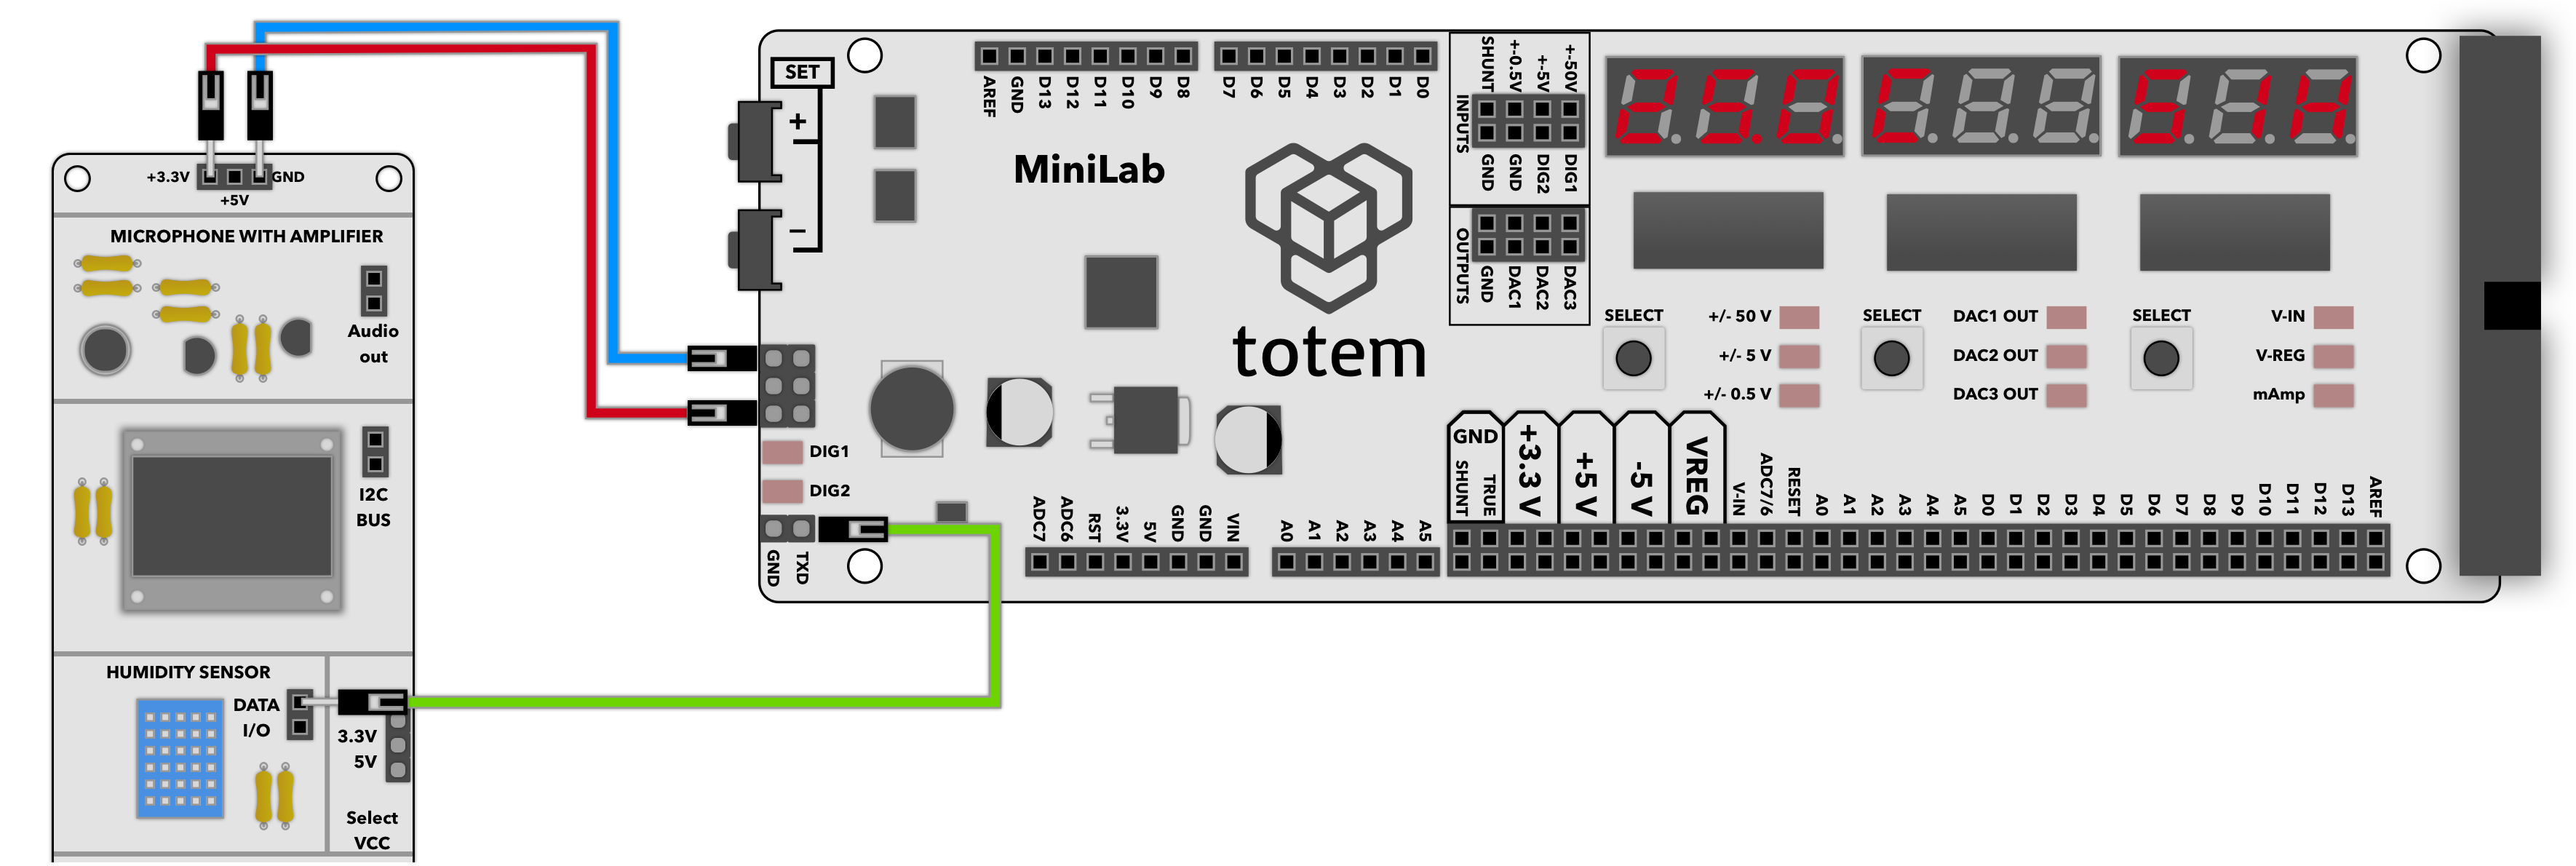 Mini Lab LabBoard DHT11 mode example